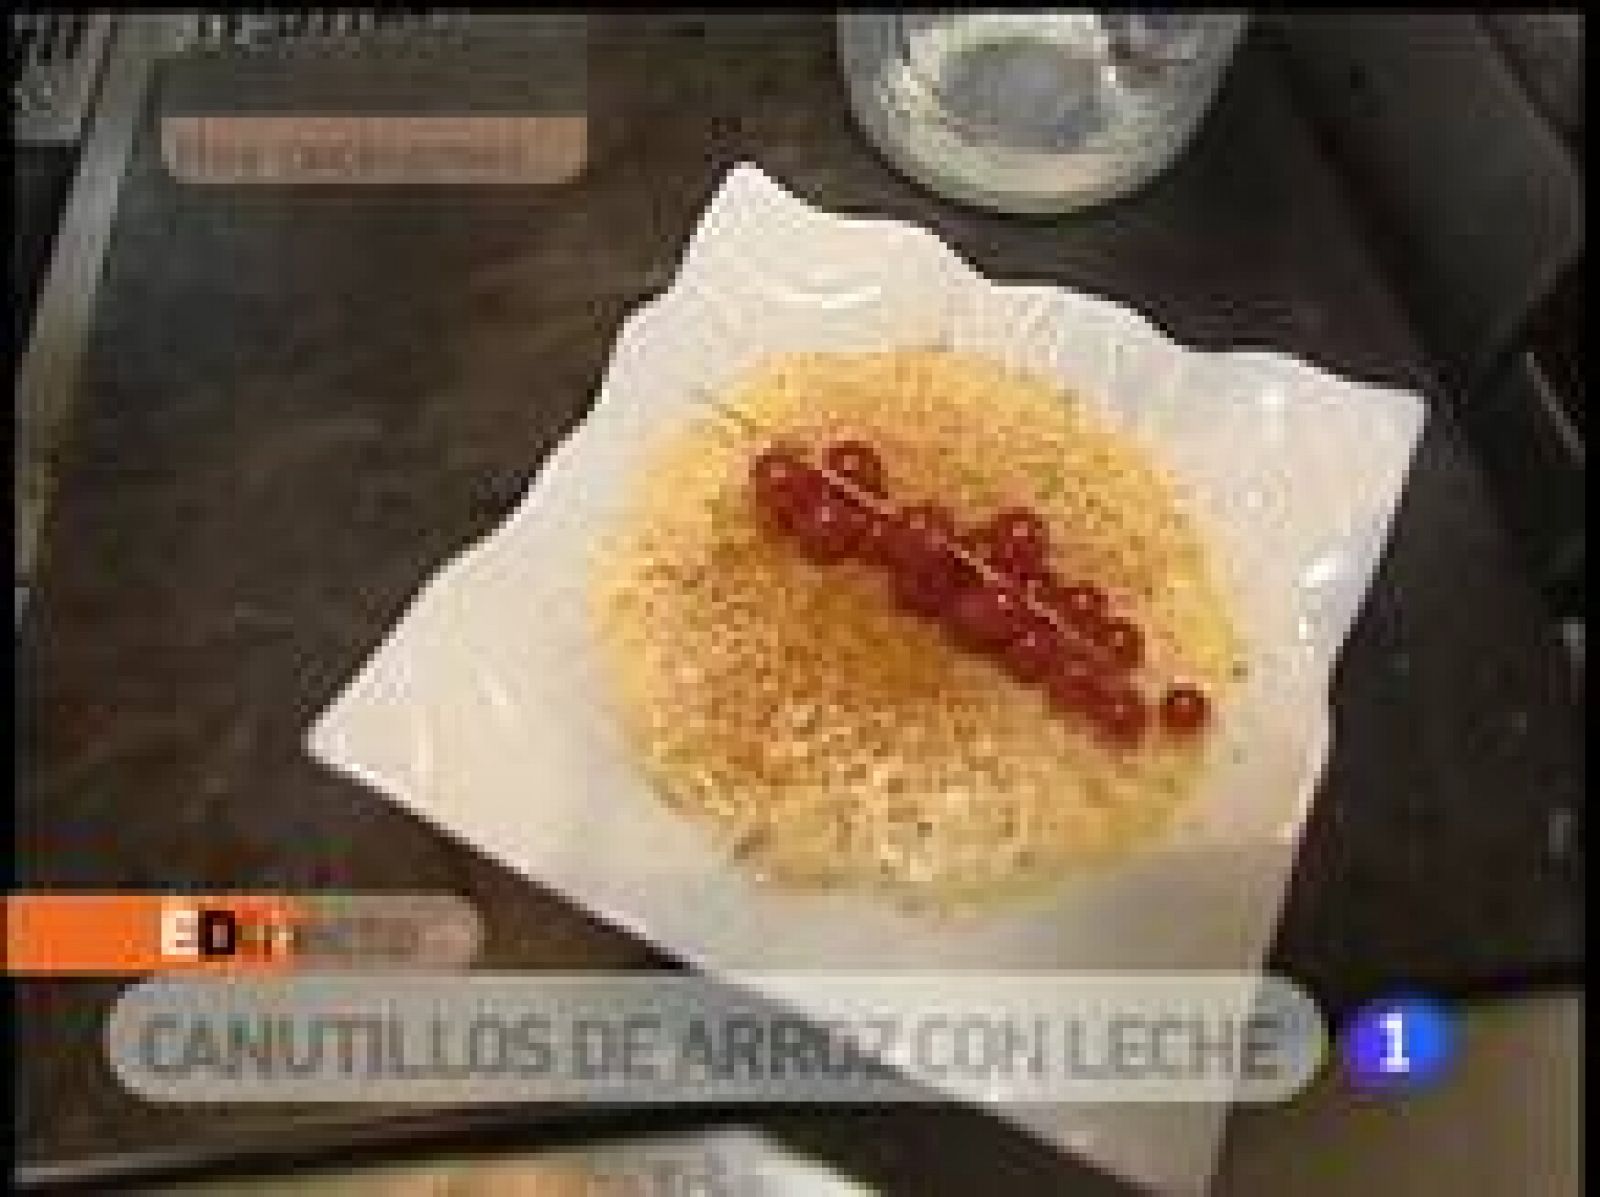 RTVE Cocina: Canutillos de arroz con leche | RTVE Play